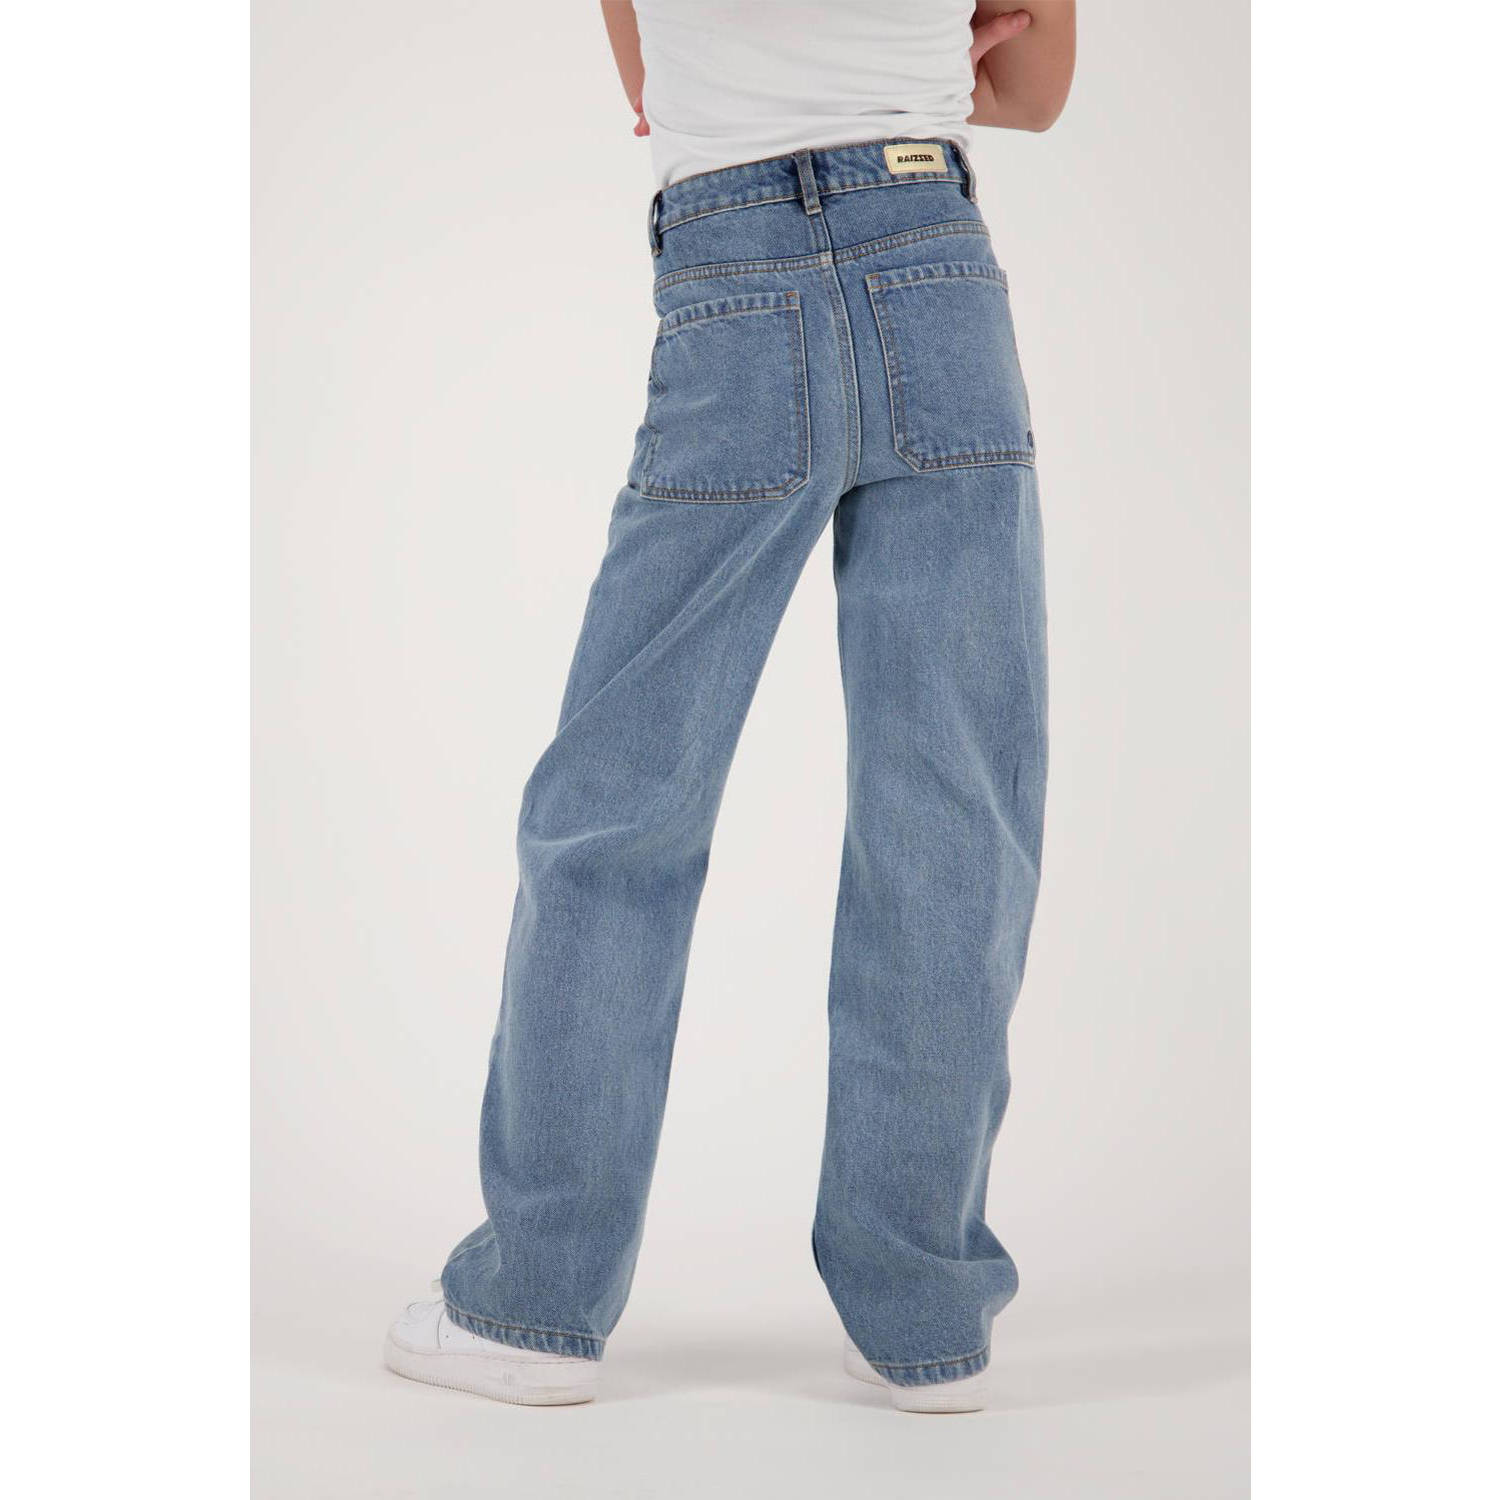 Raizzed high waist loose fit jeans Mississippi worker vintage blue